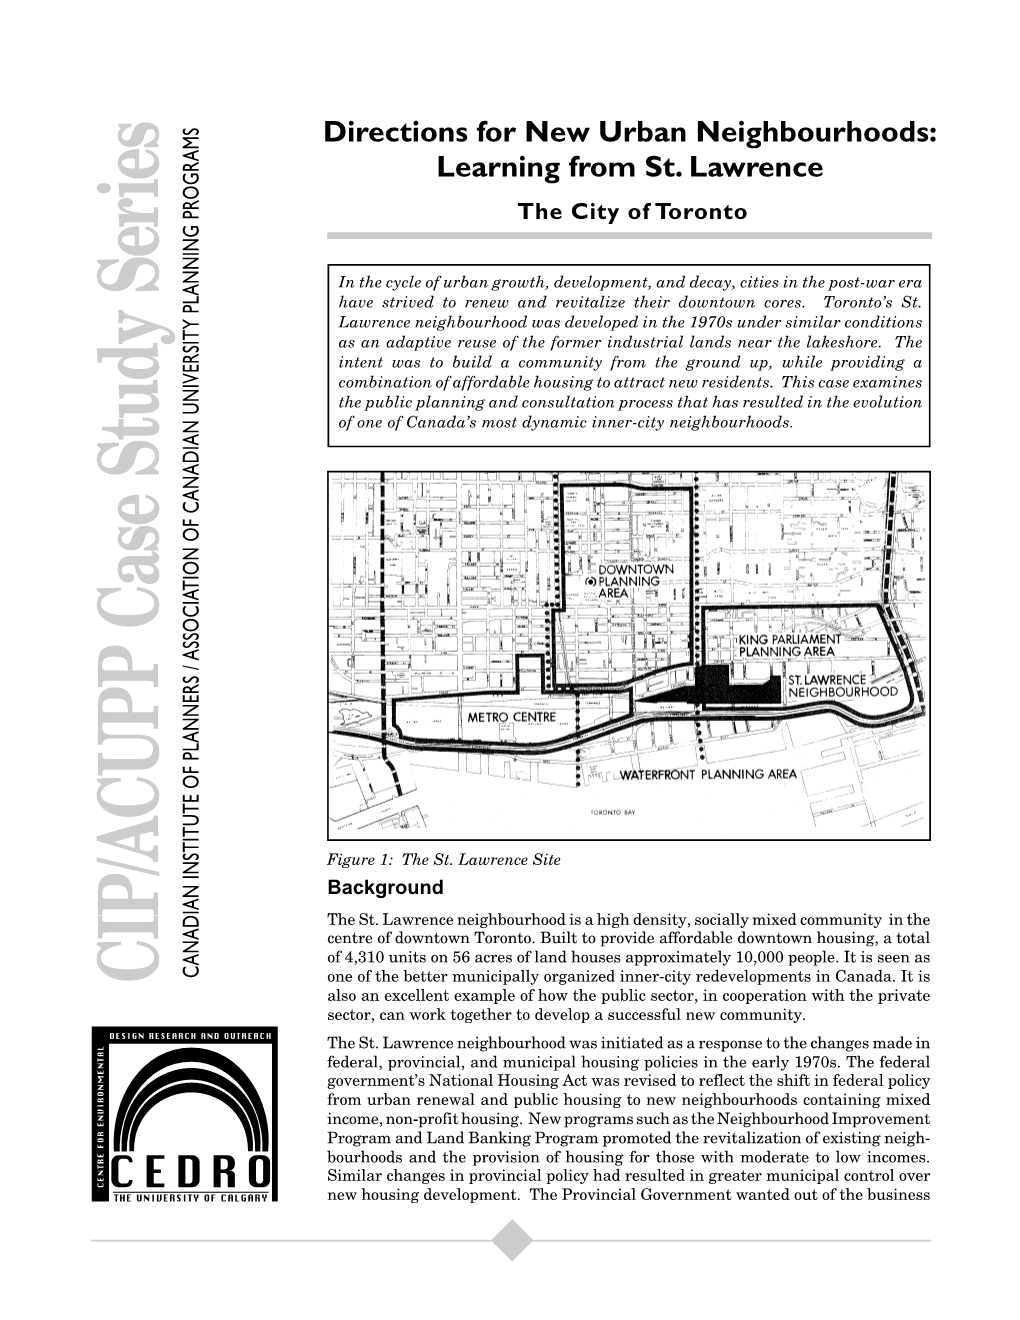 St. Lawrence Case Study